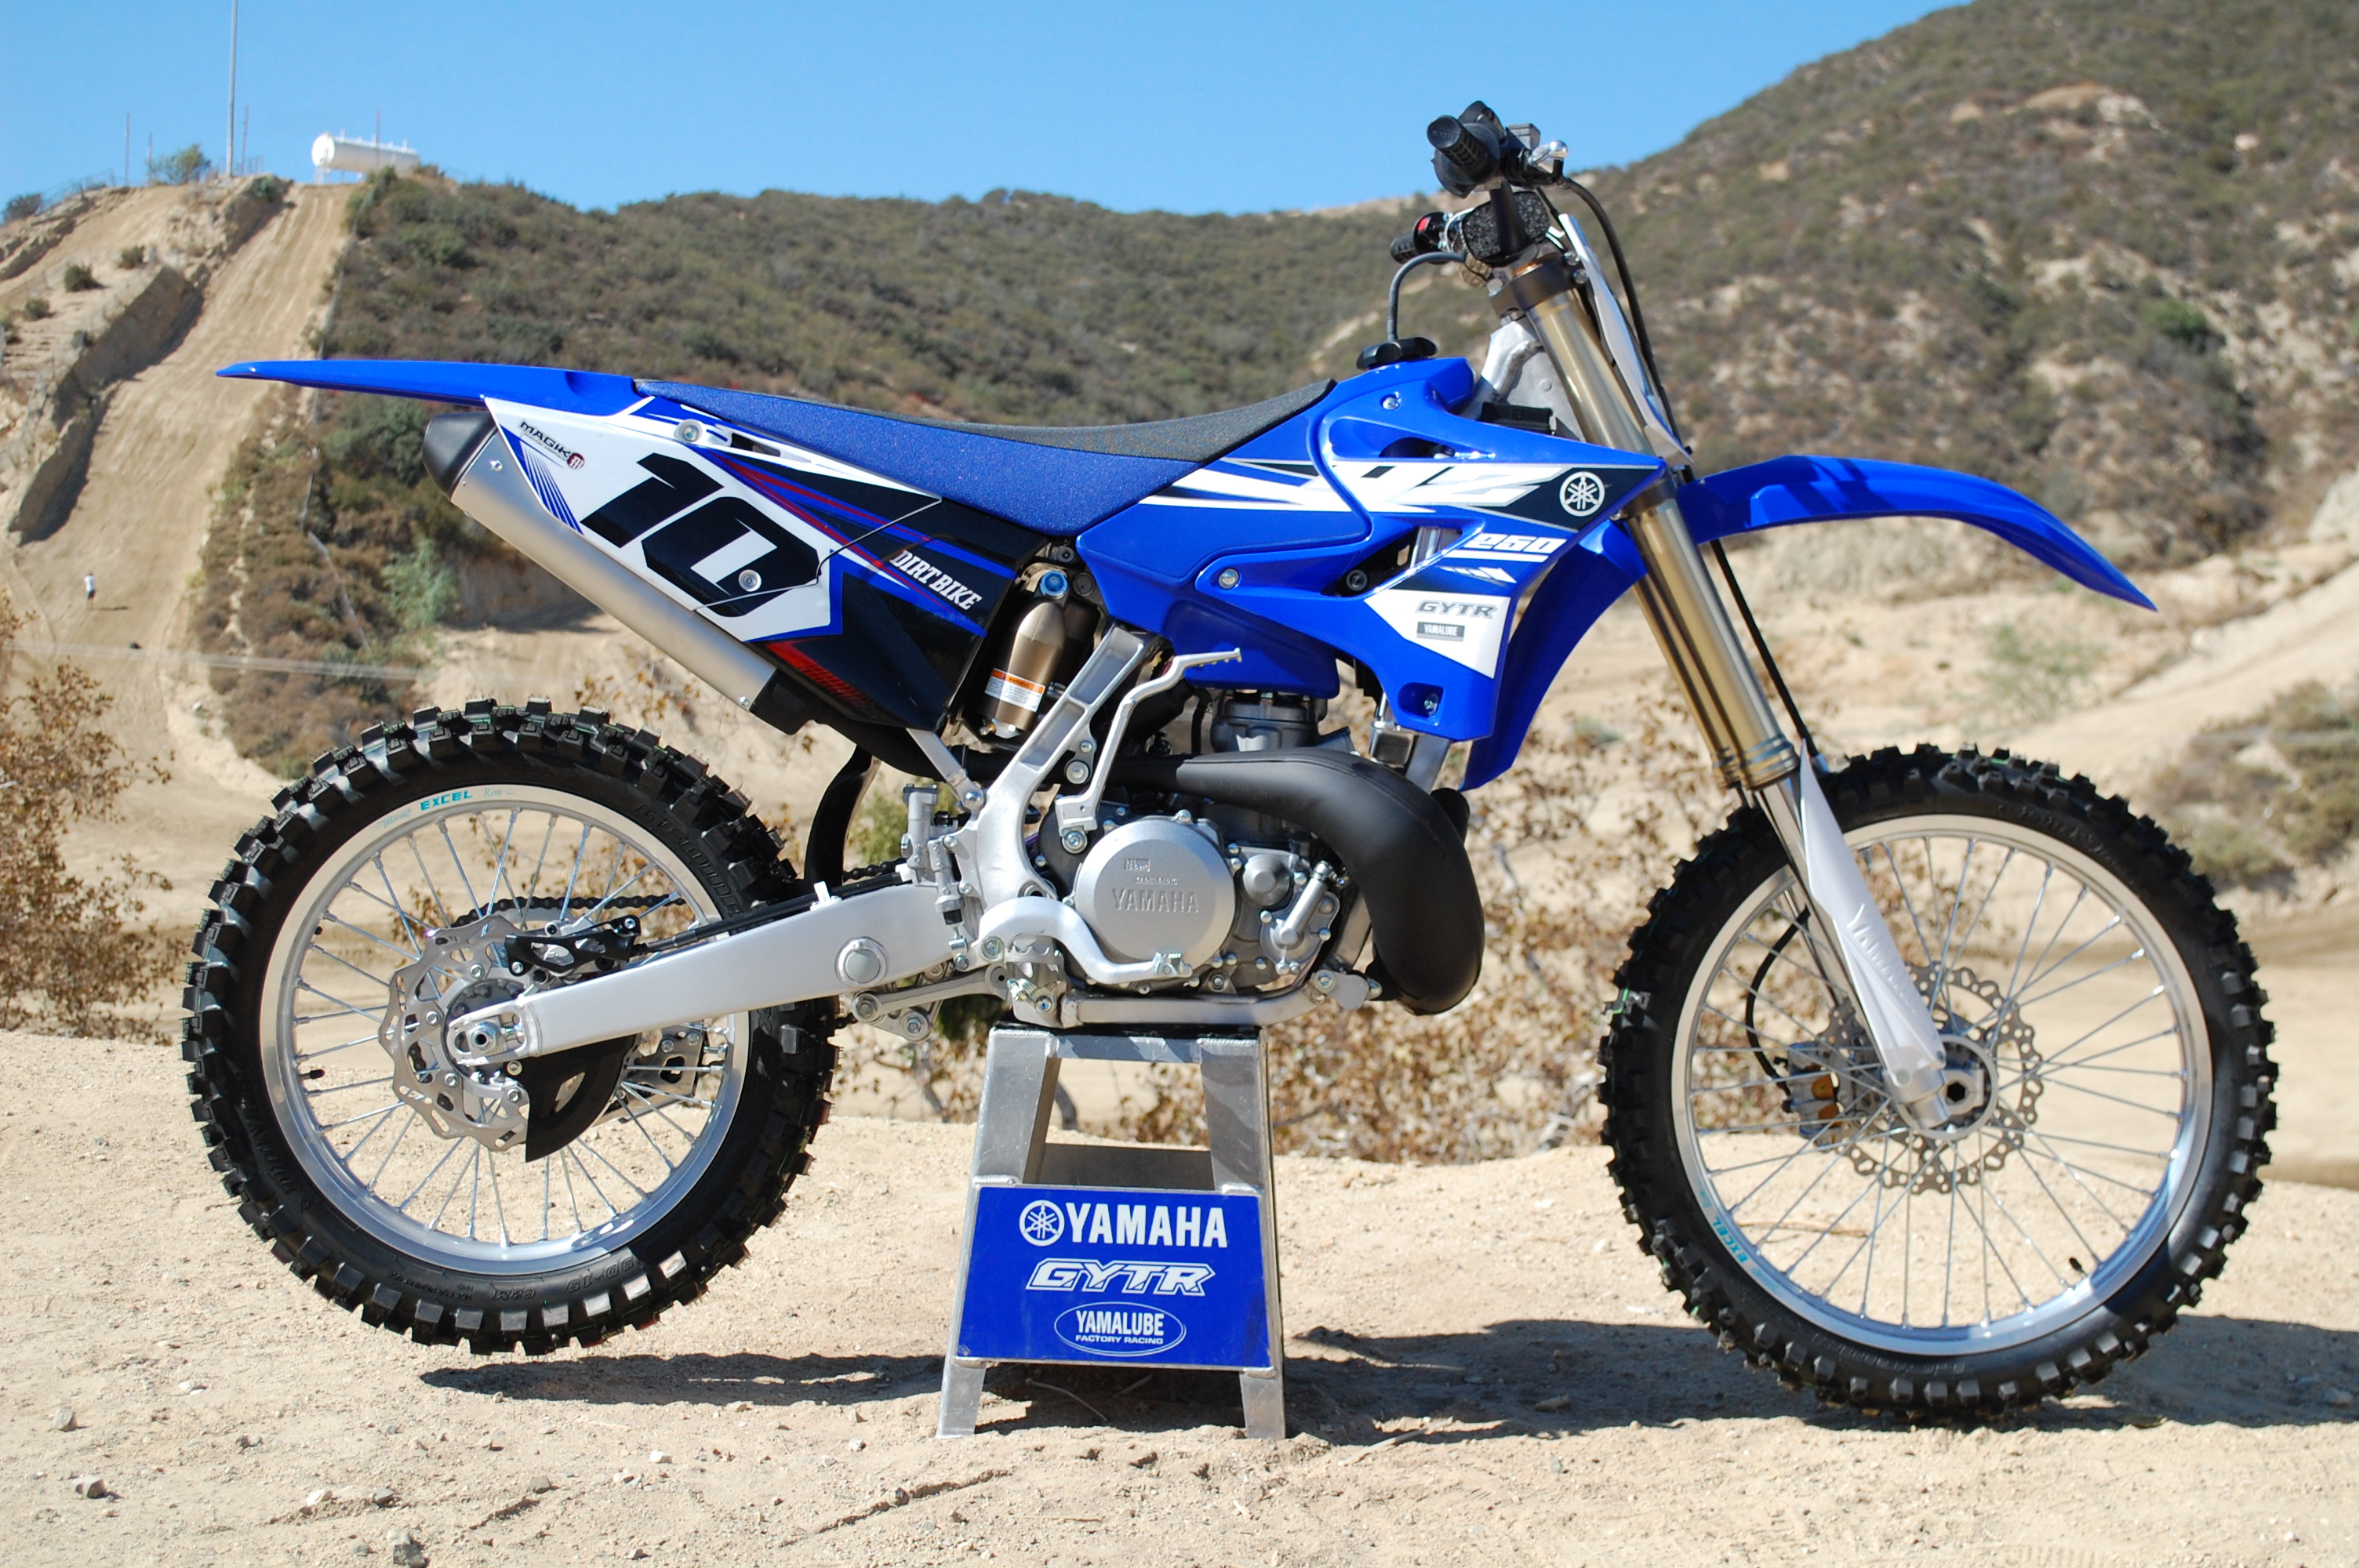 Image Gallery For Yamaha Dirt Bikes